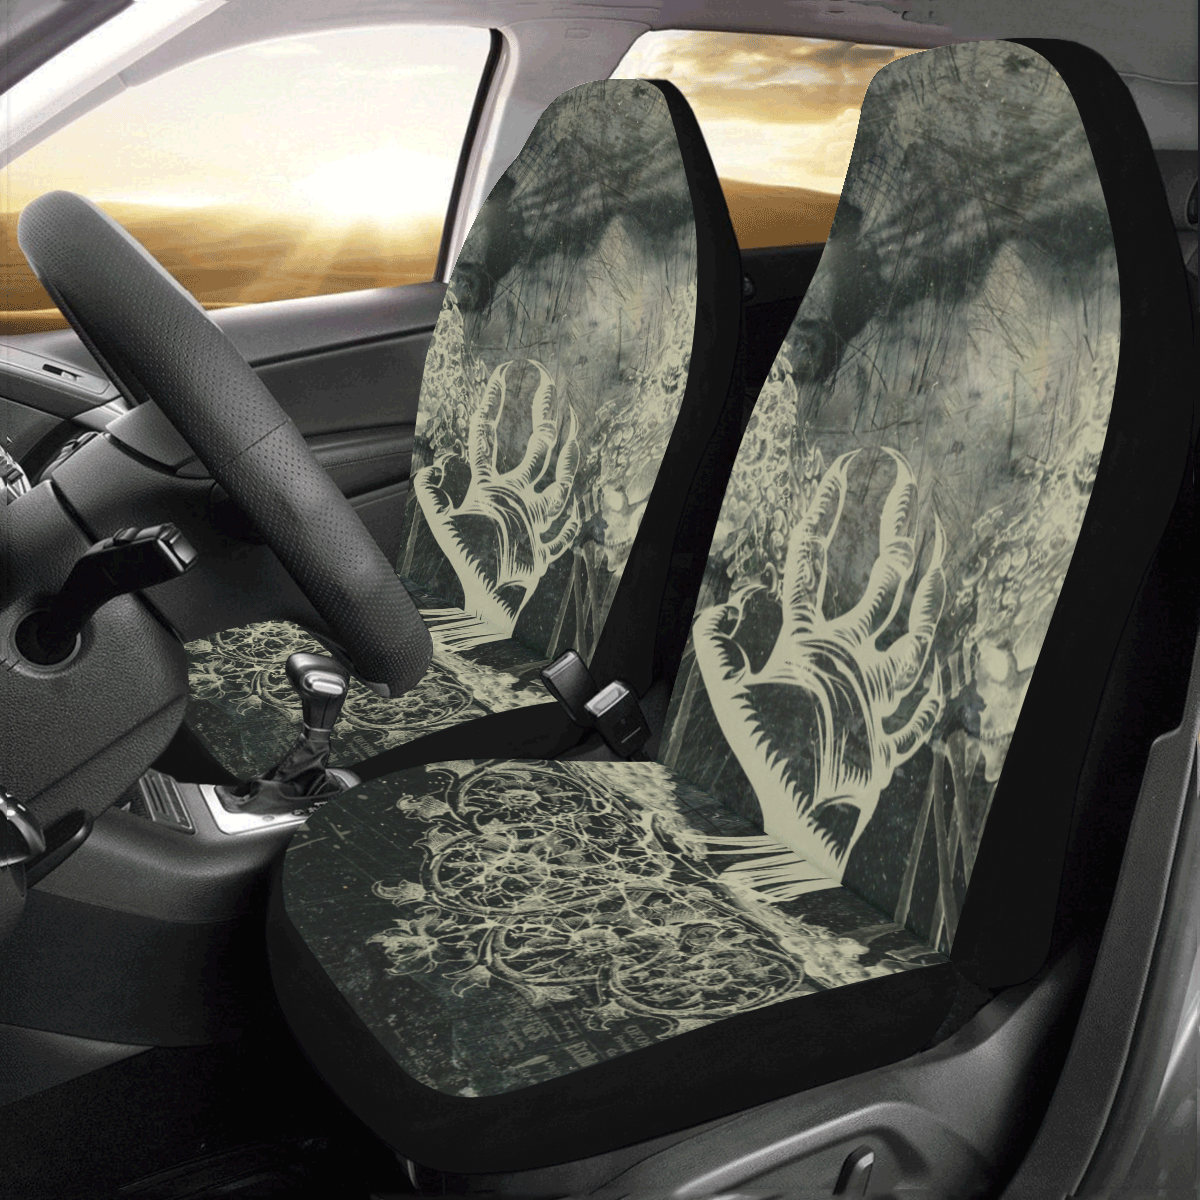 The dark side, skulls Car Seat Covers (Set of 2)